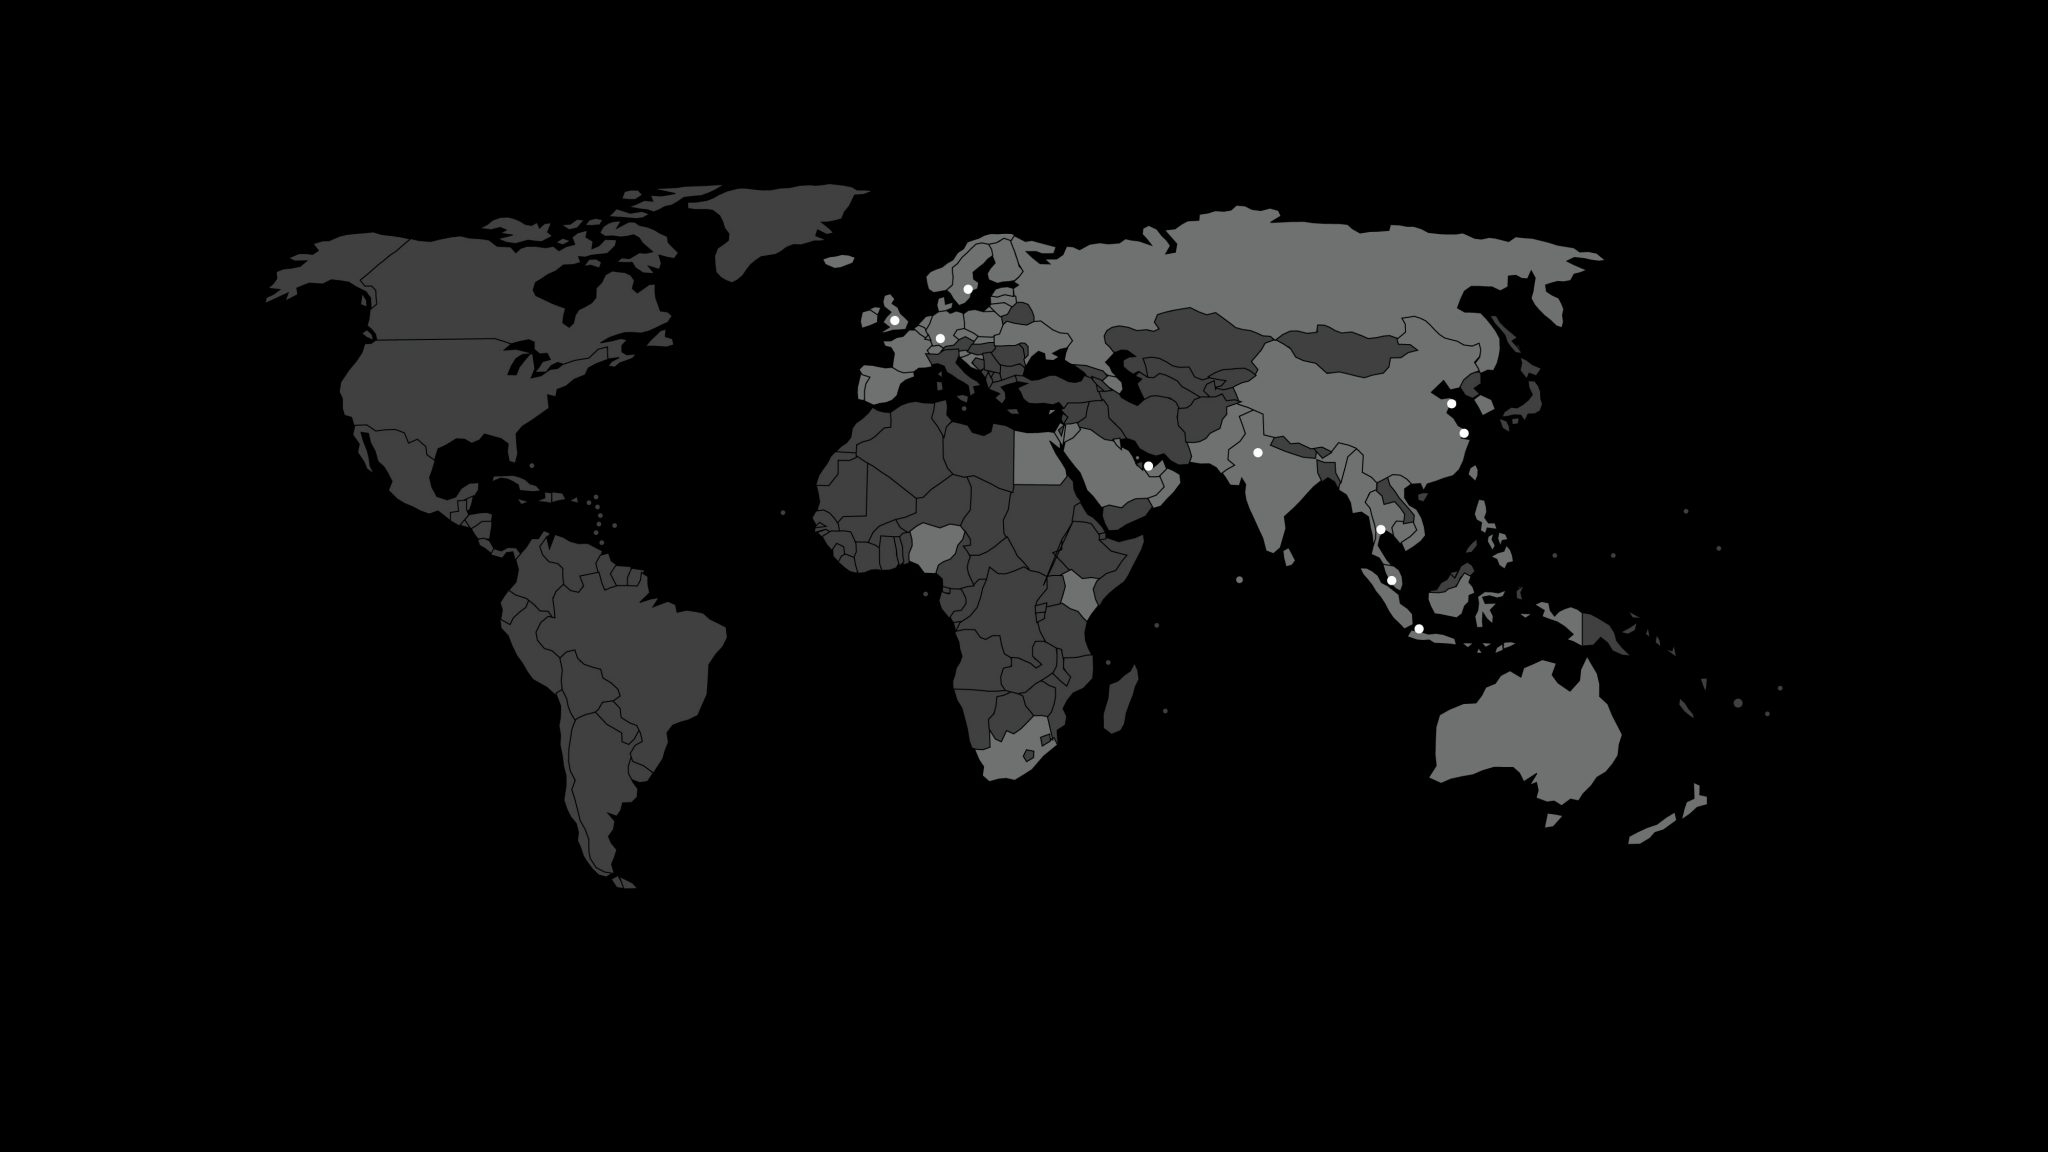 Black world map